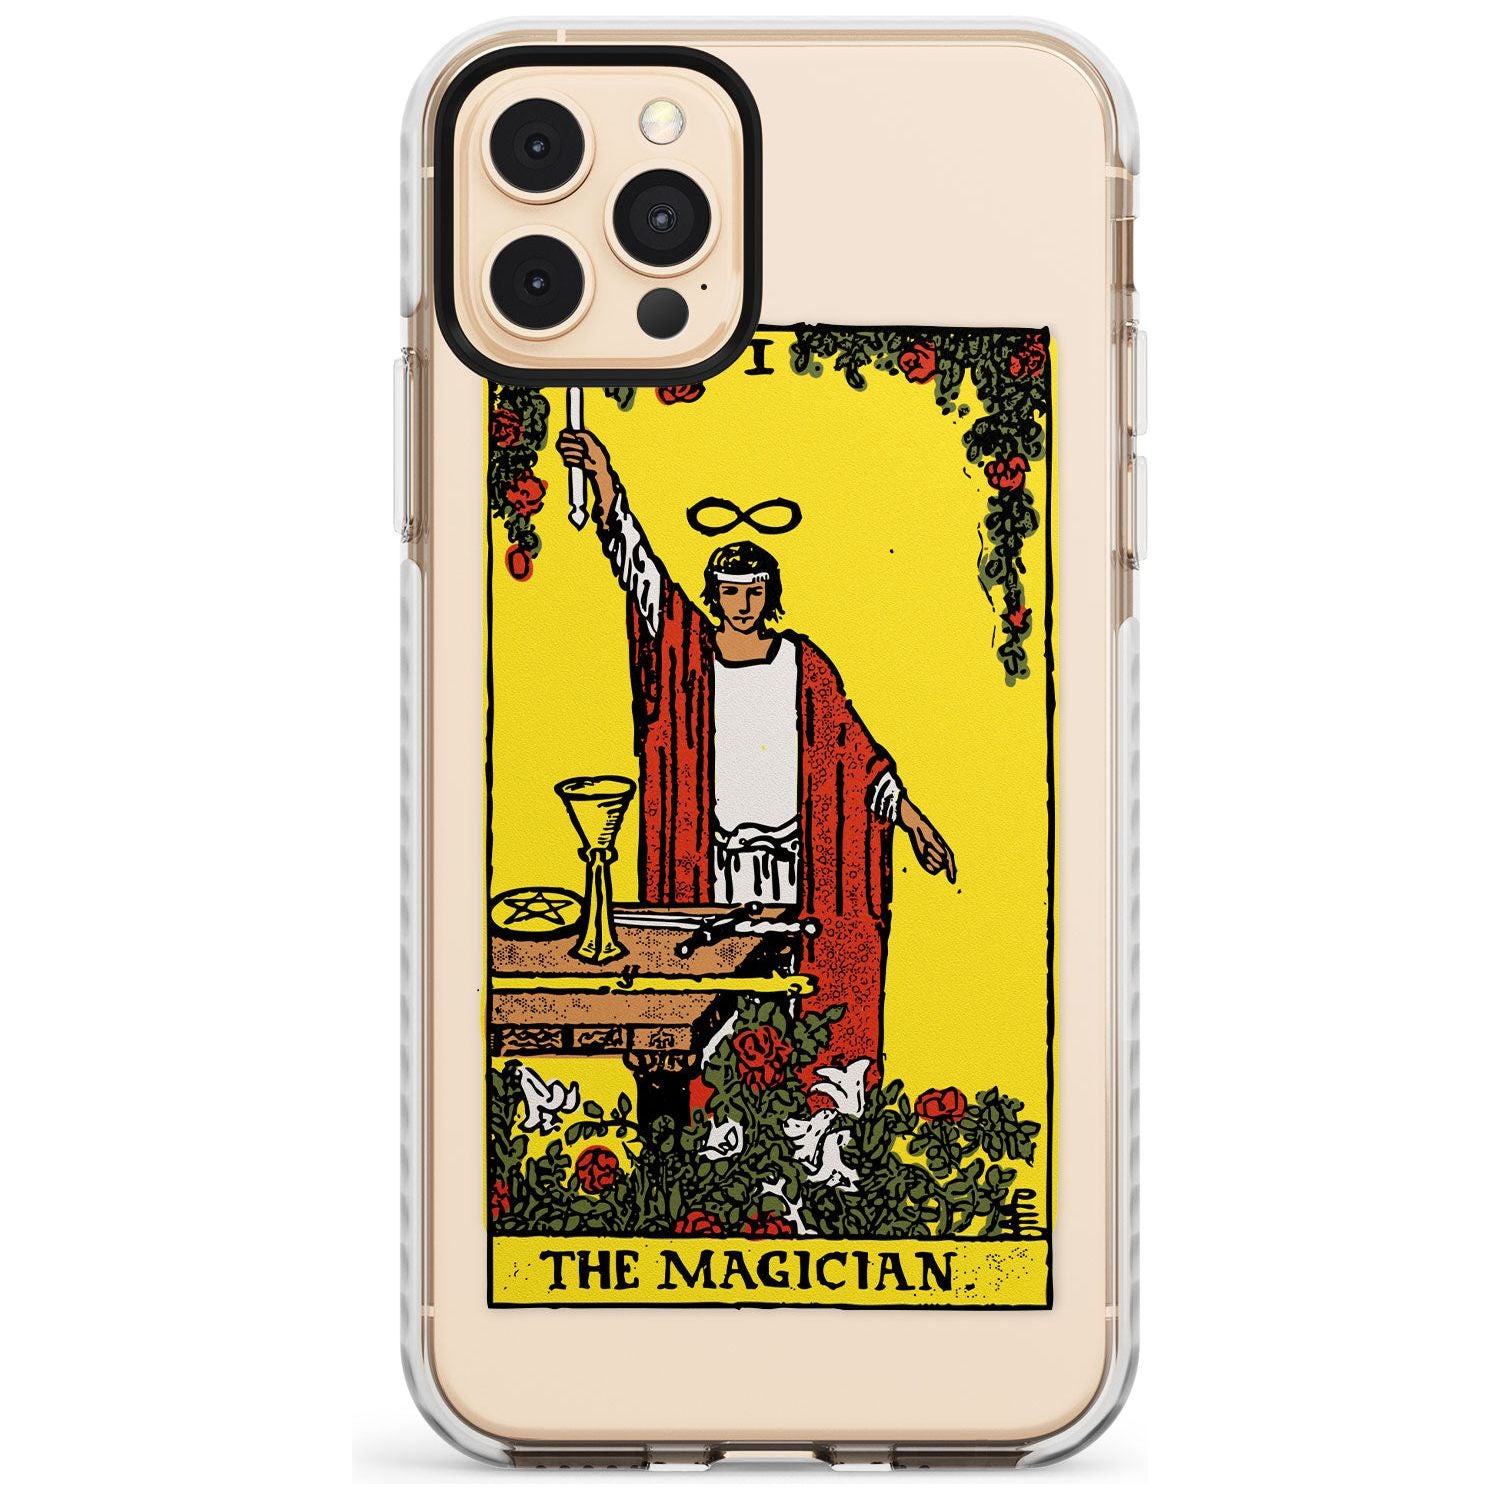 The Magician Tarot Card - Colour Slim TPU Phone Case for iPhone 11 Pro Max